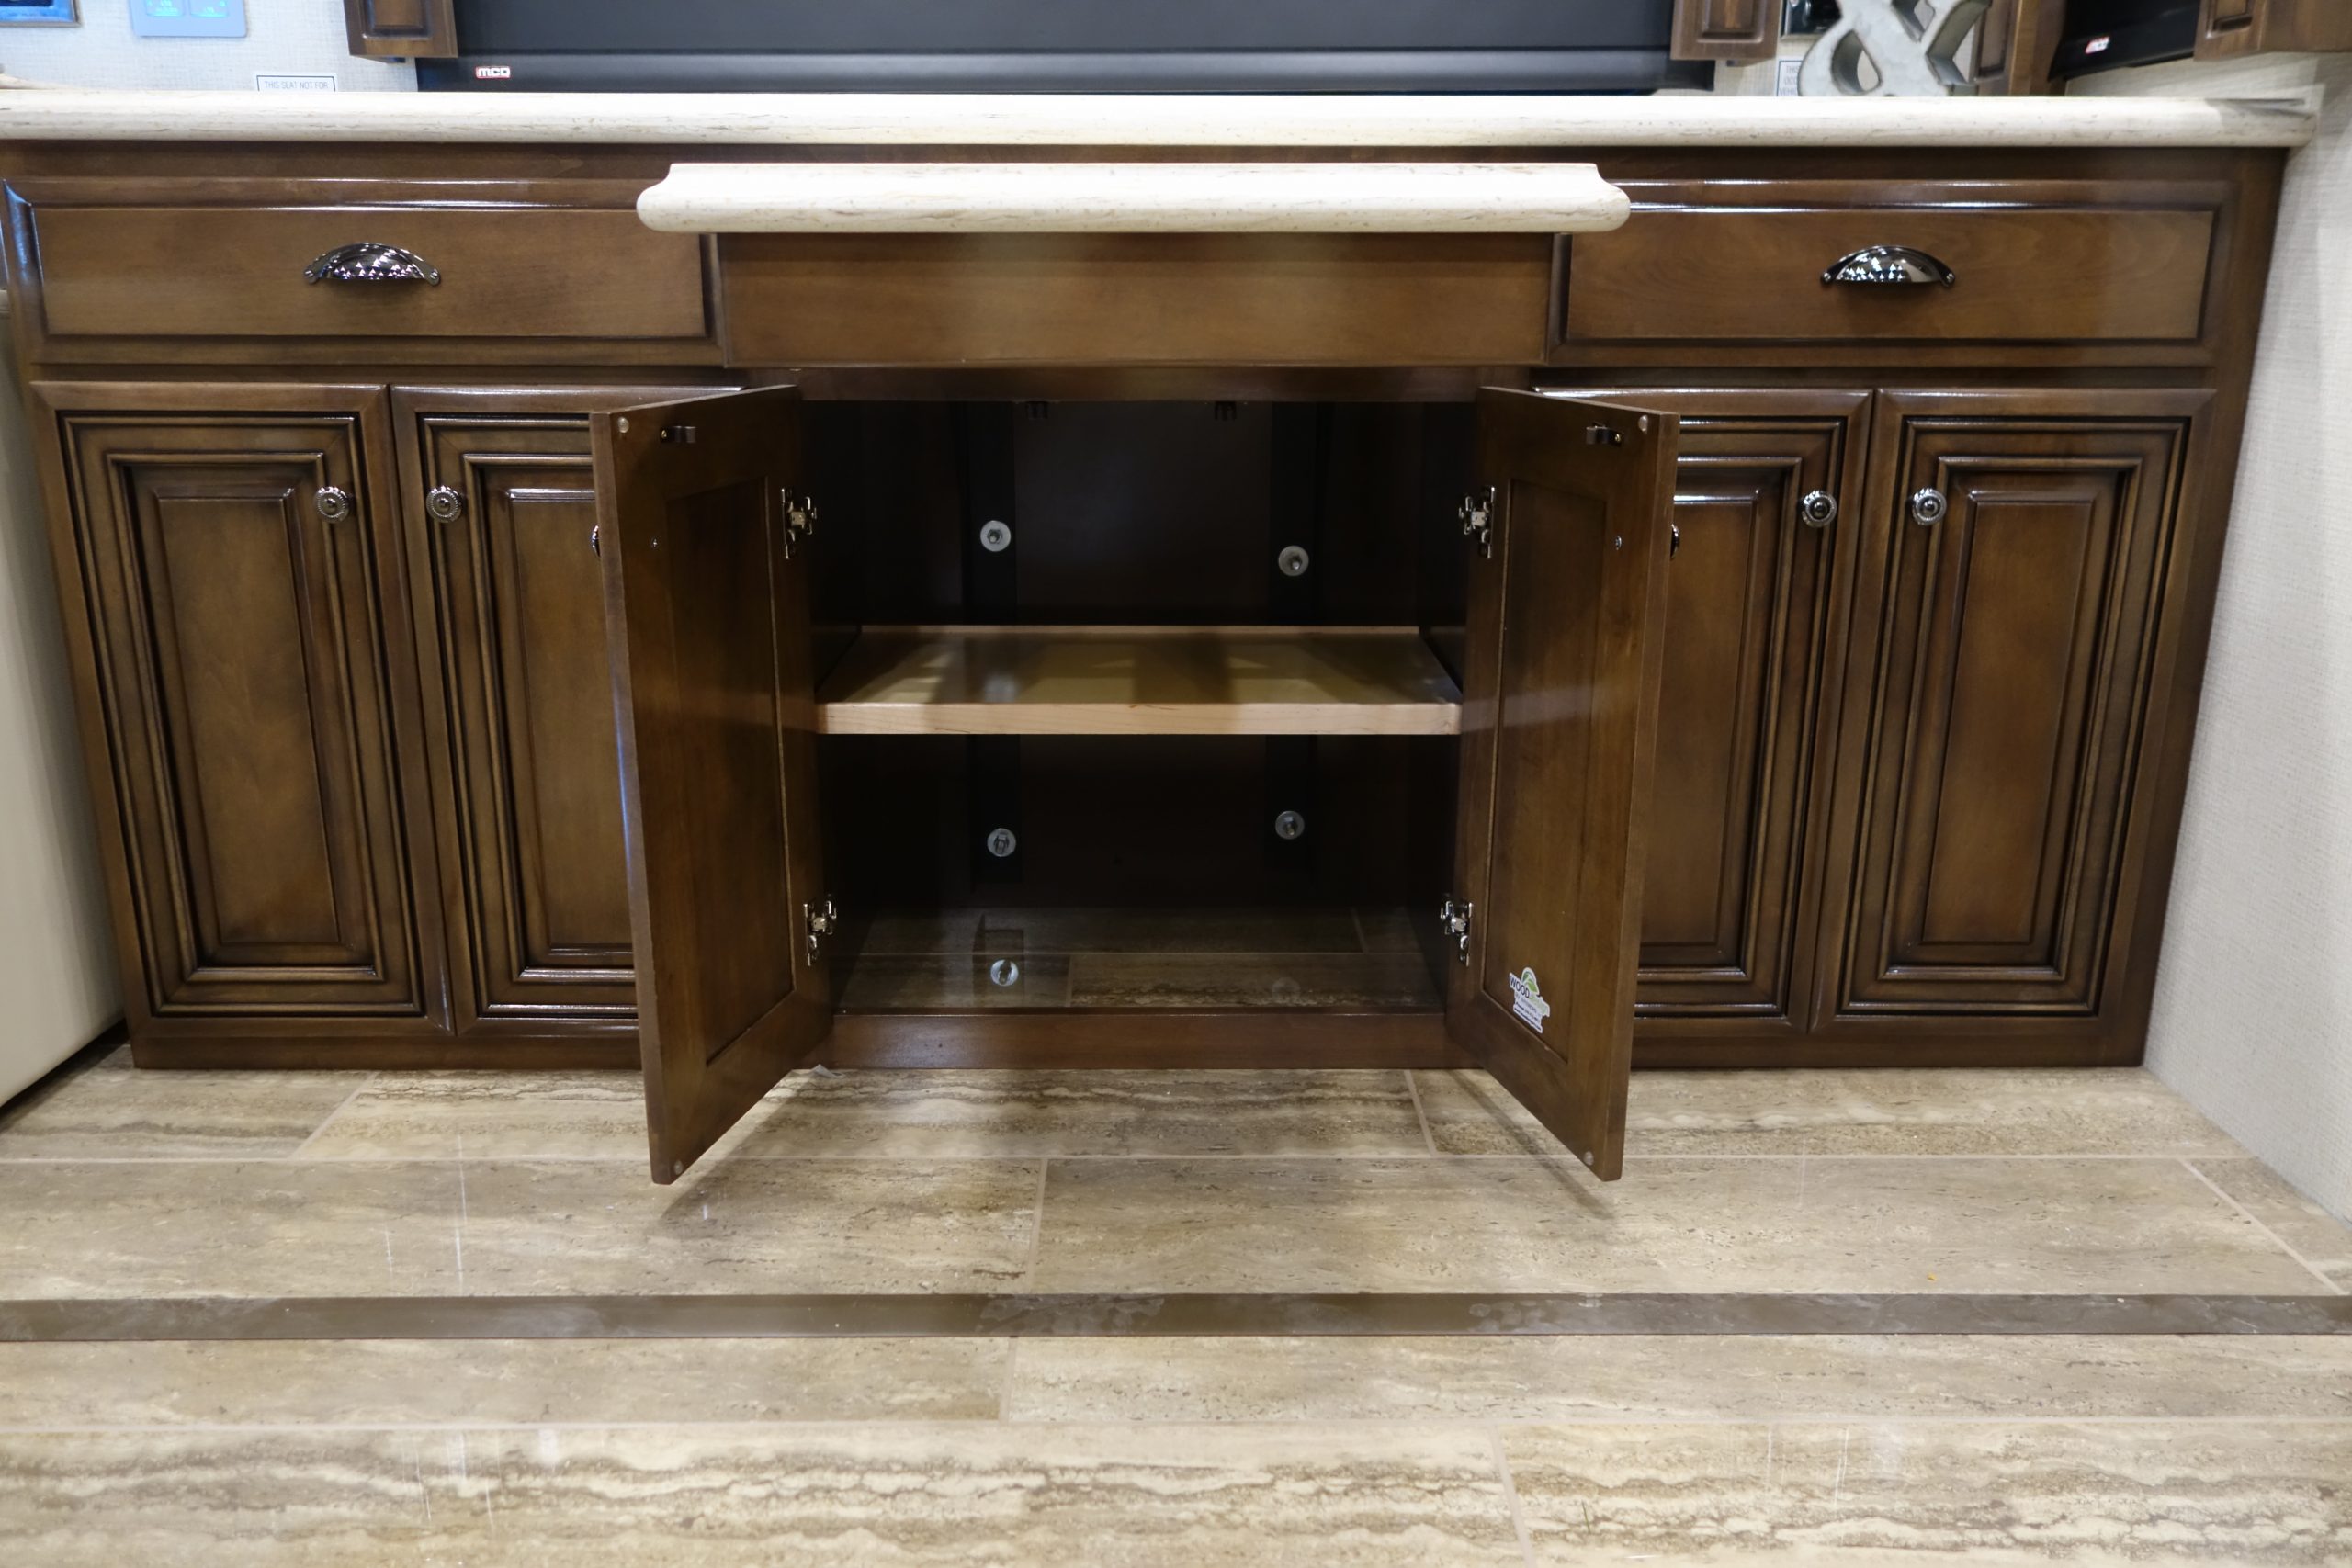 The Executive Desk - Maximum Shelf Space - RV Wood Design